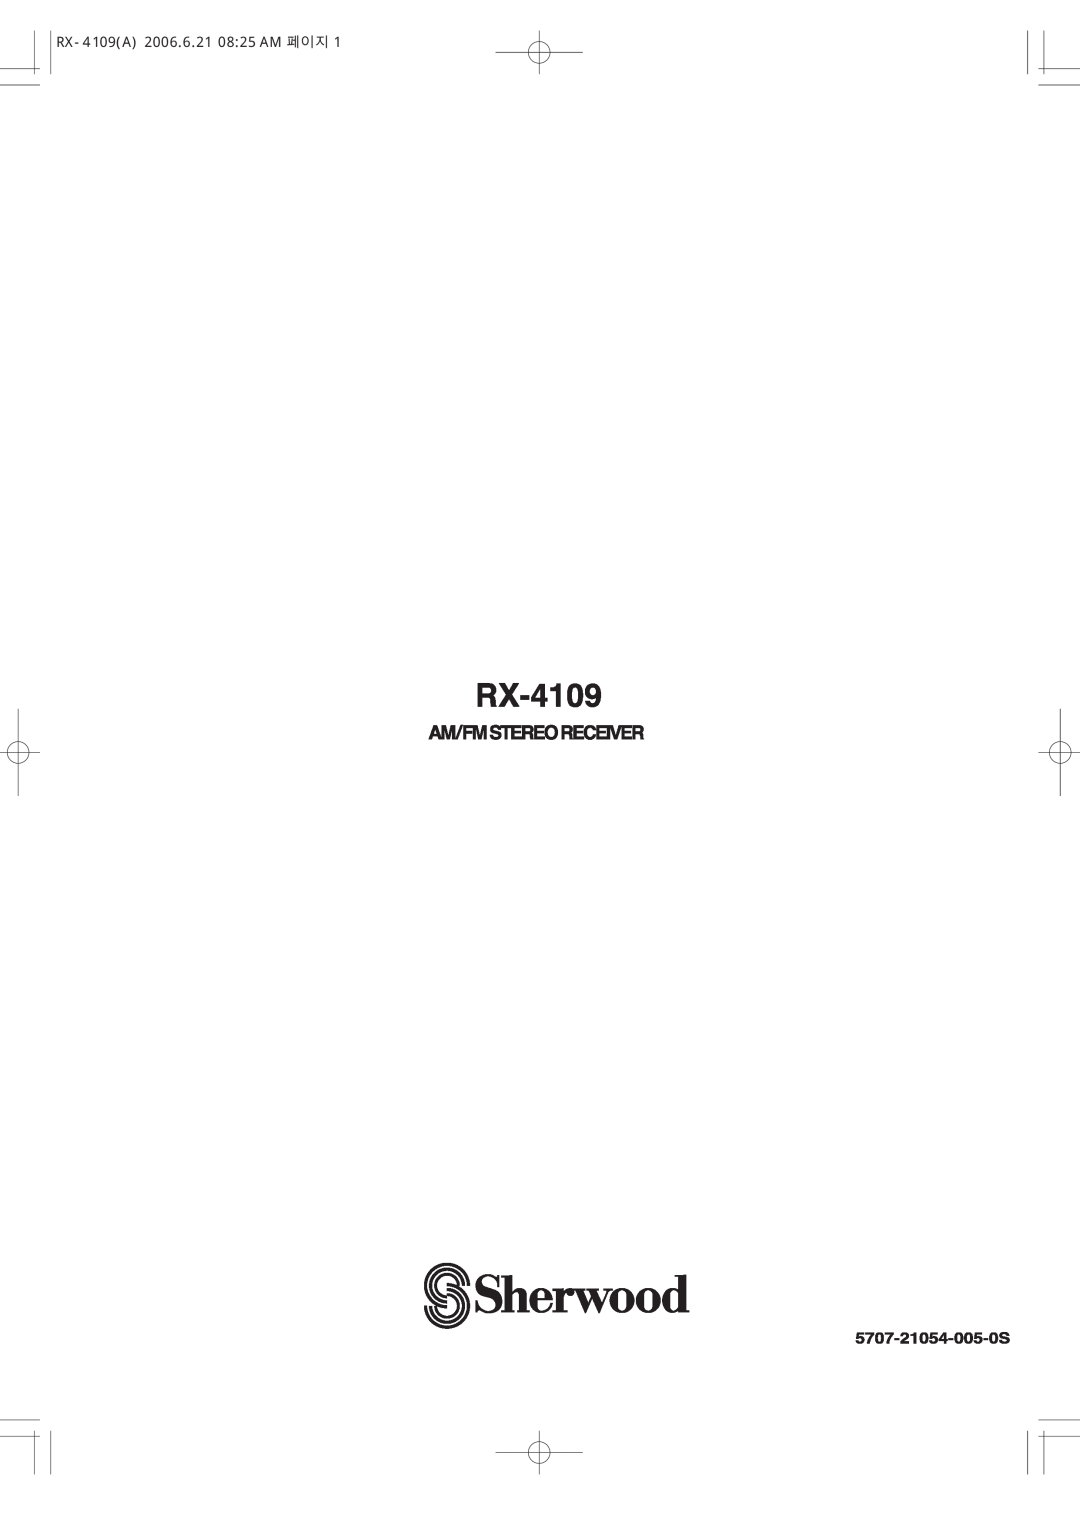 Sherwood RX-4109 manual 